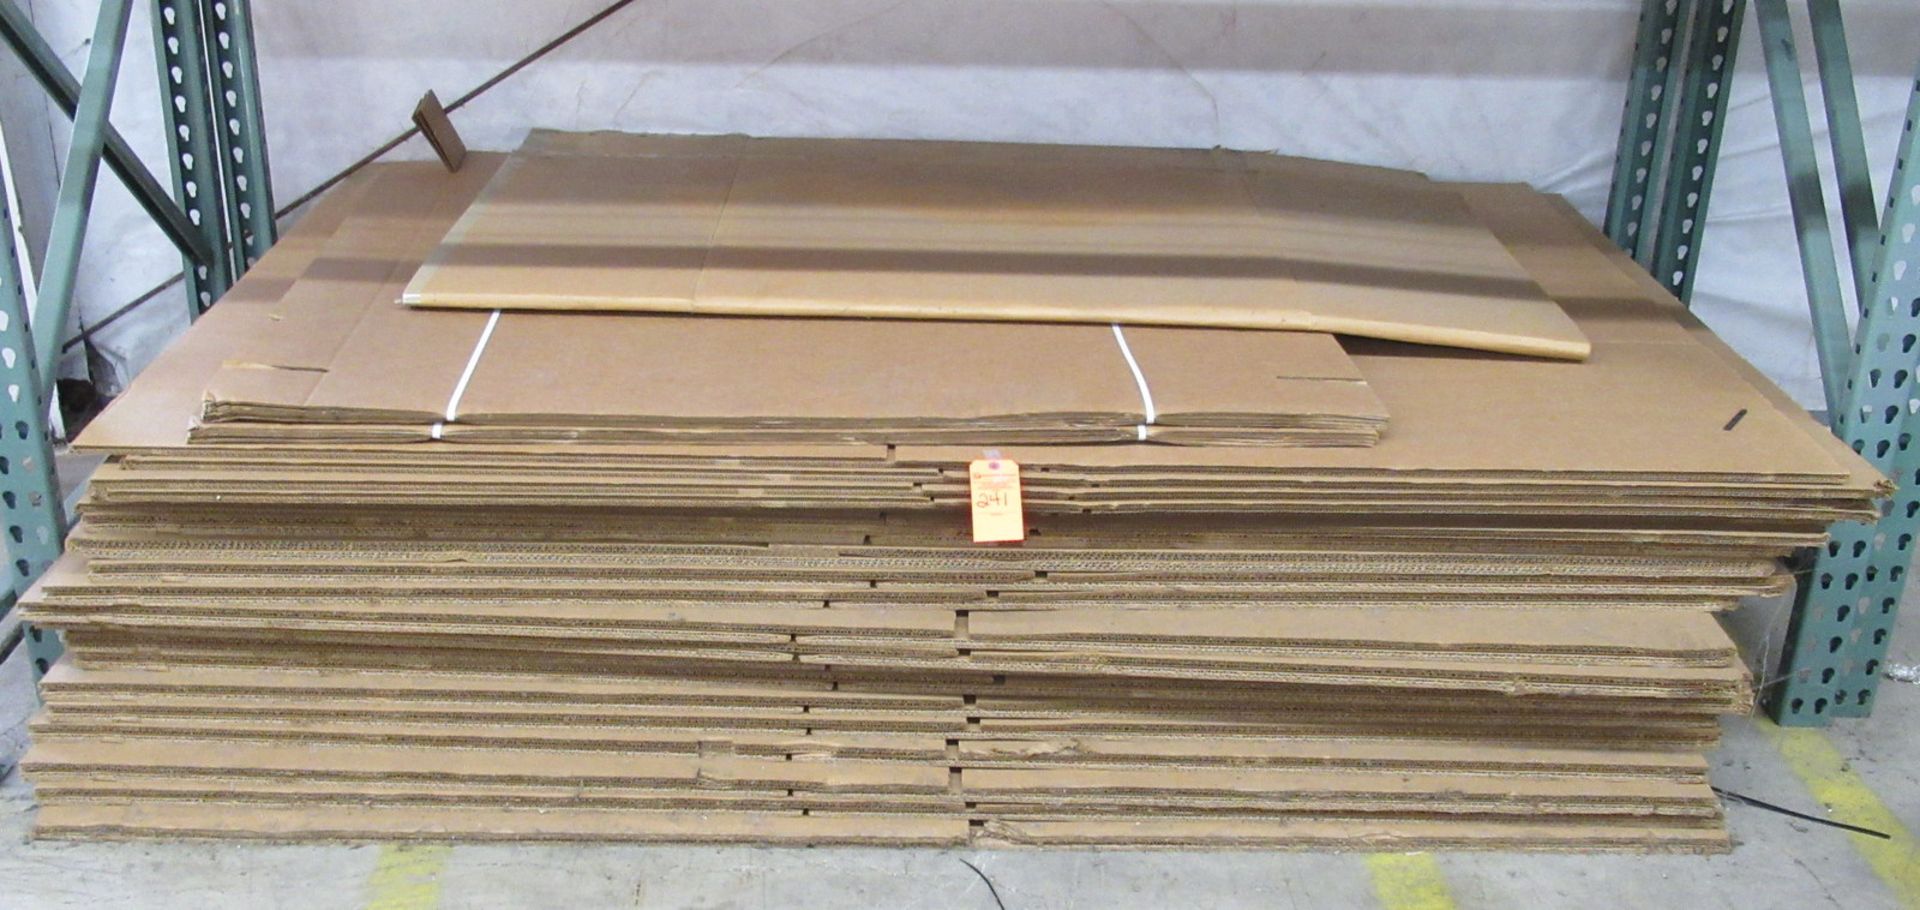 Flat Cardboard Boxes